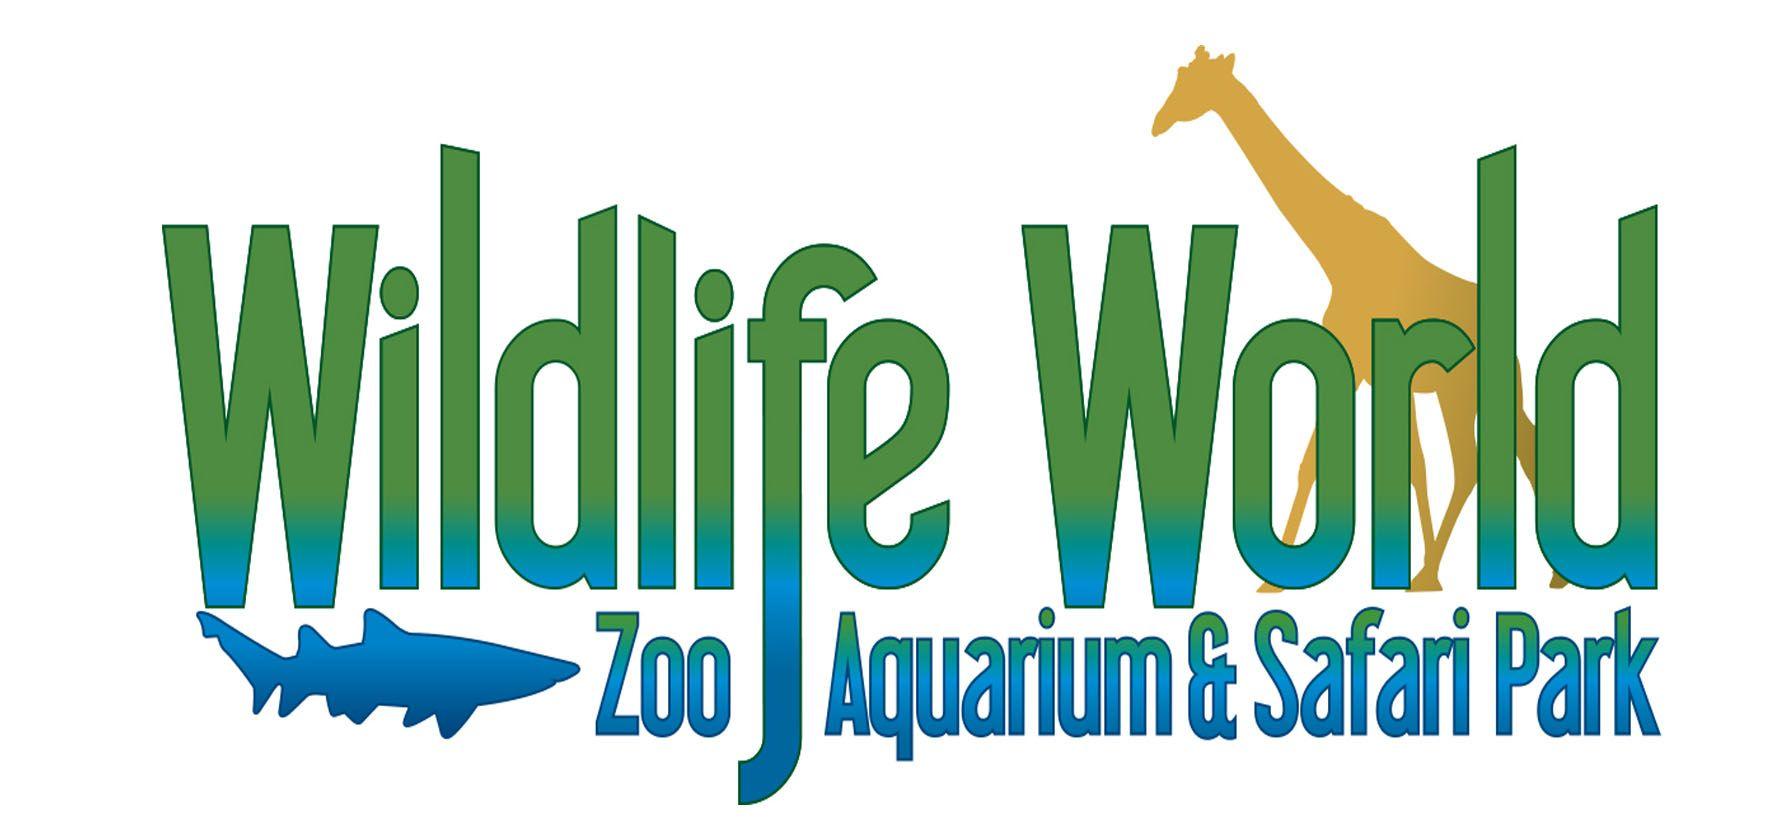 Home wildlife. Сафари лого. Aqua Zoo Friesland. Aqua Printing logo. Umra Safari logo.